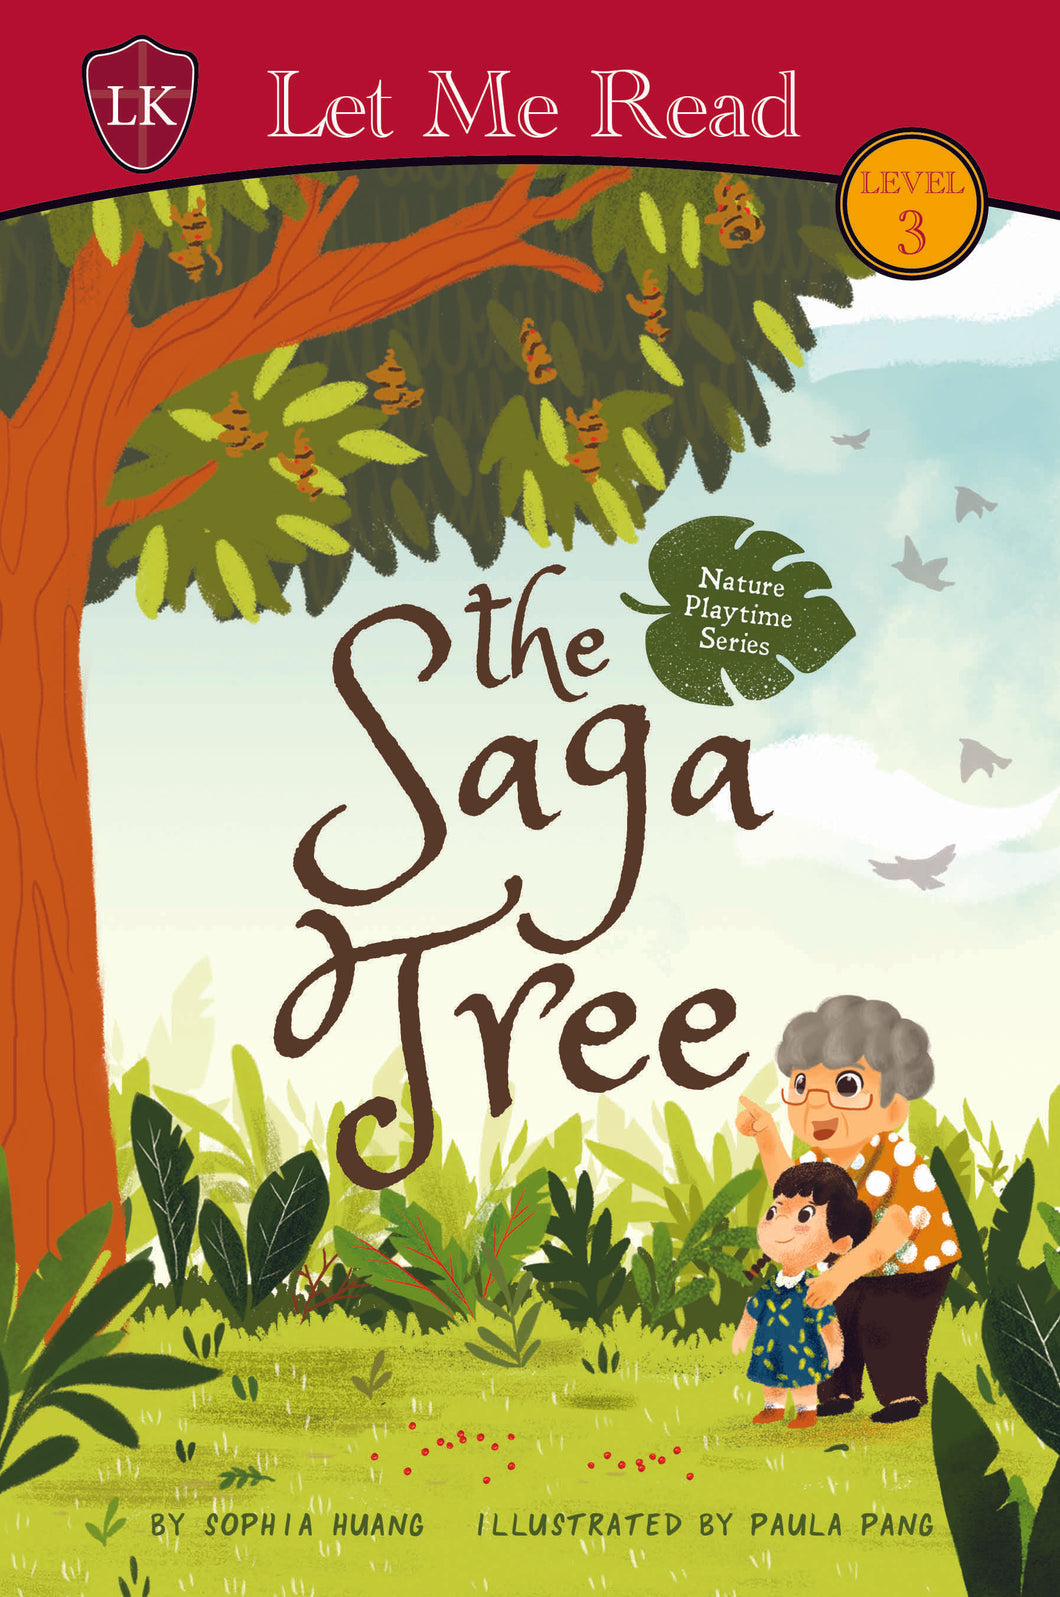 Nature Playtime Series - The Saga Tree